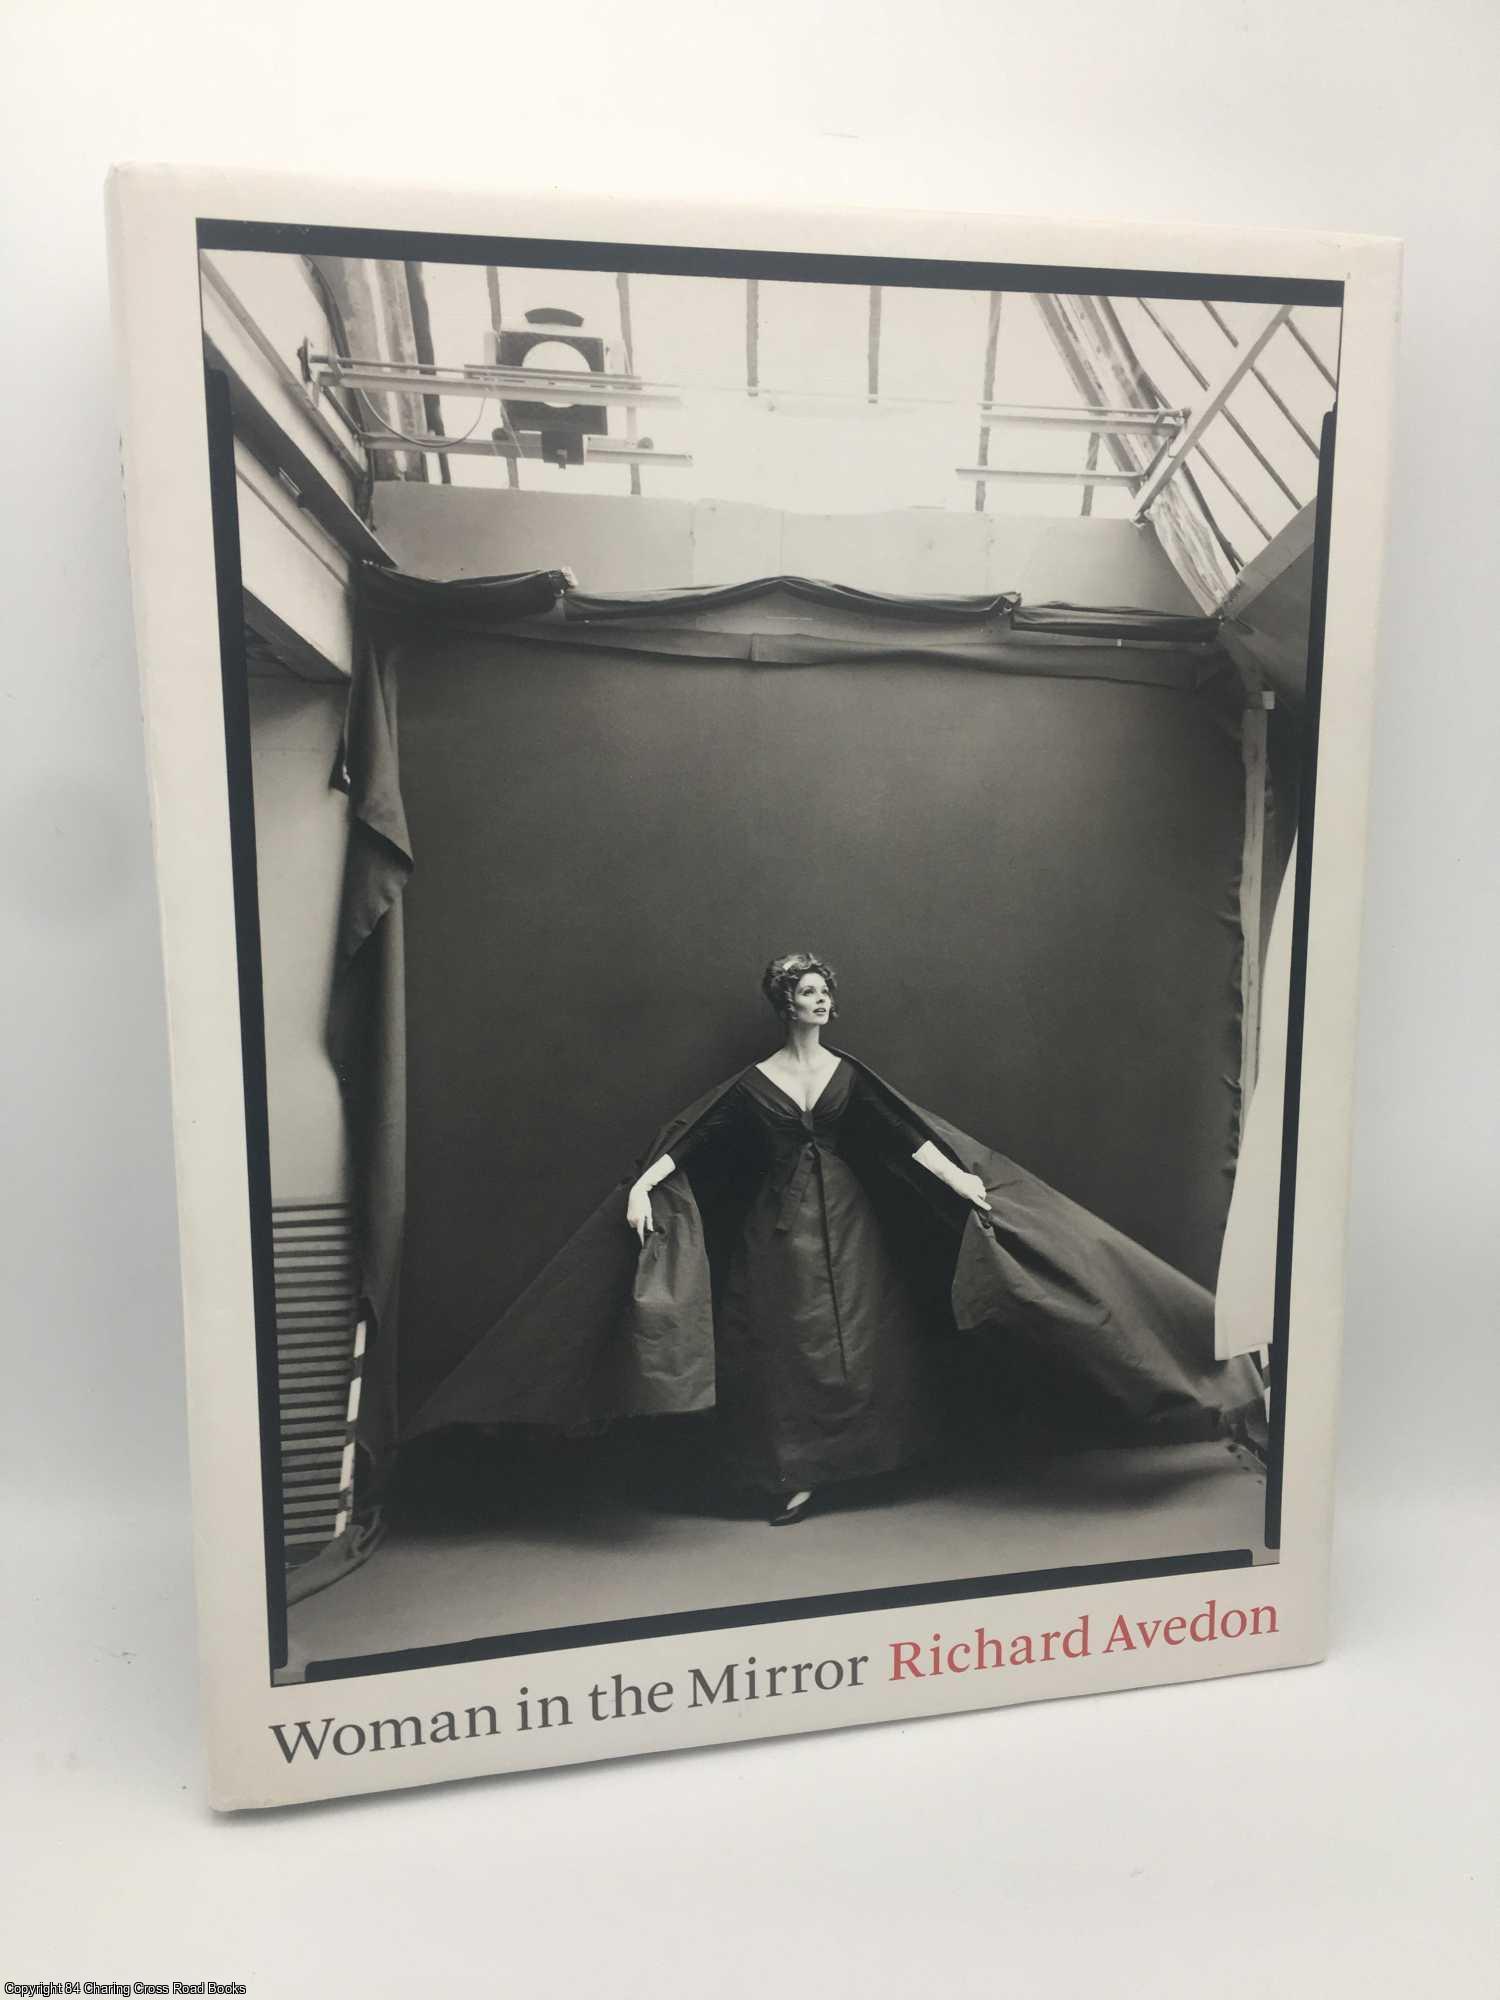 Avedon, Richard - Woman in the Mirror